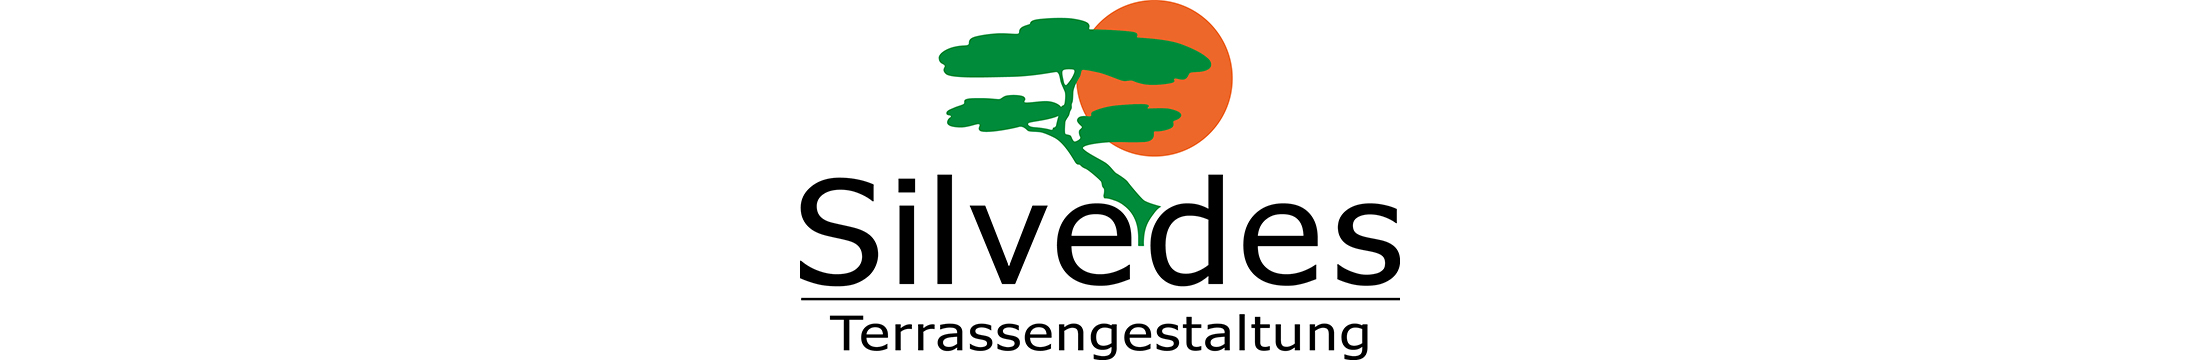 Logo Silvedes AG - Terrassengestaltung